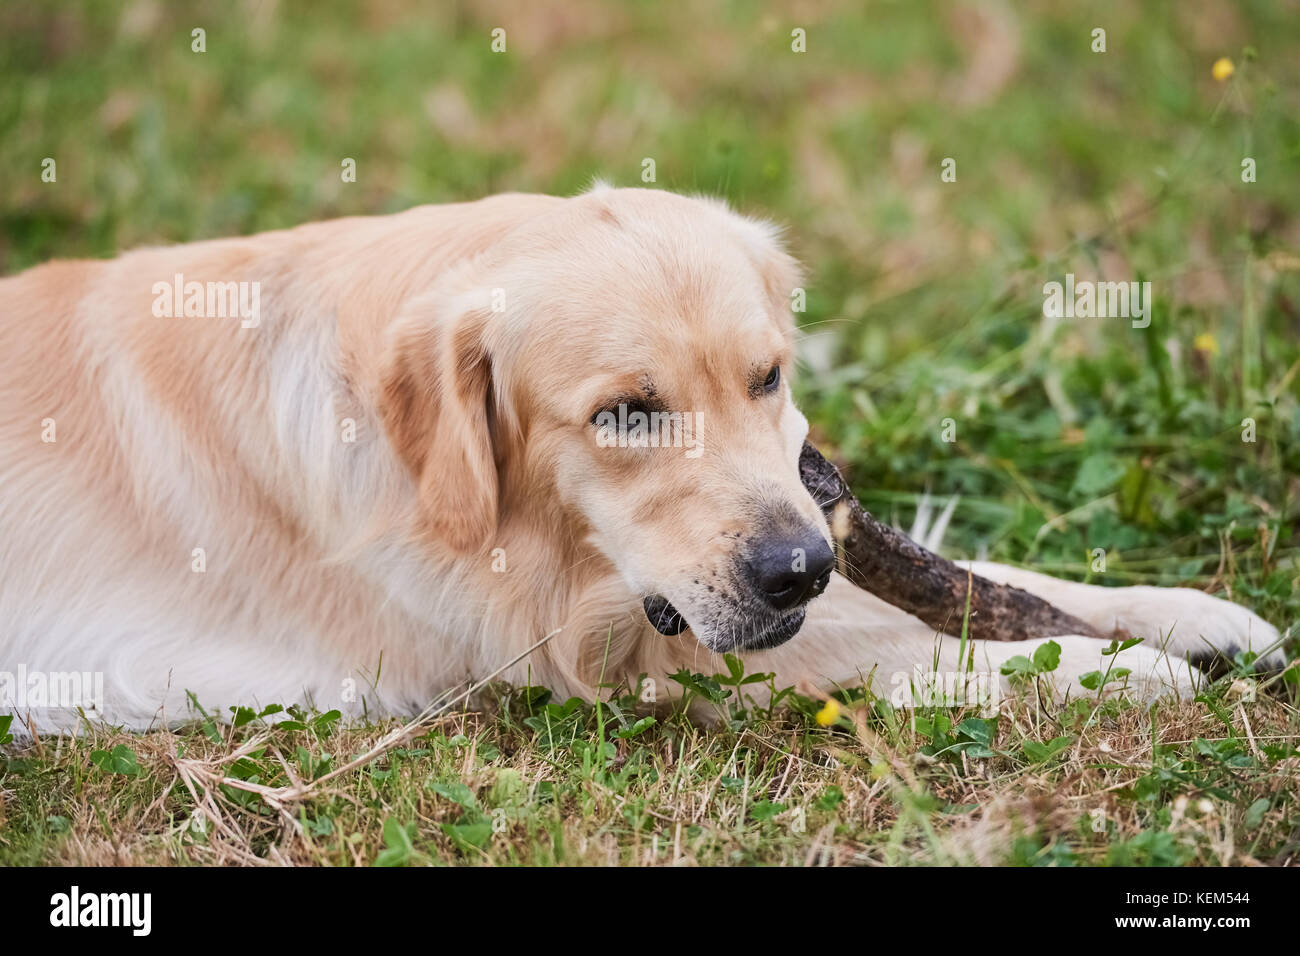 Young Purebred Golden Retriever gnaws a big wooden stick Stock Photo